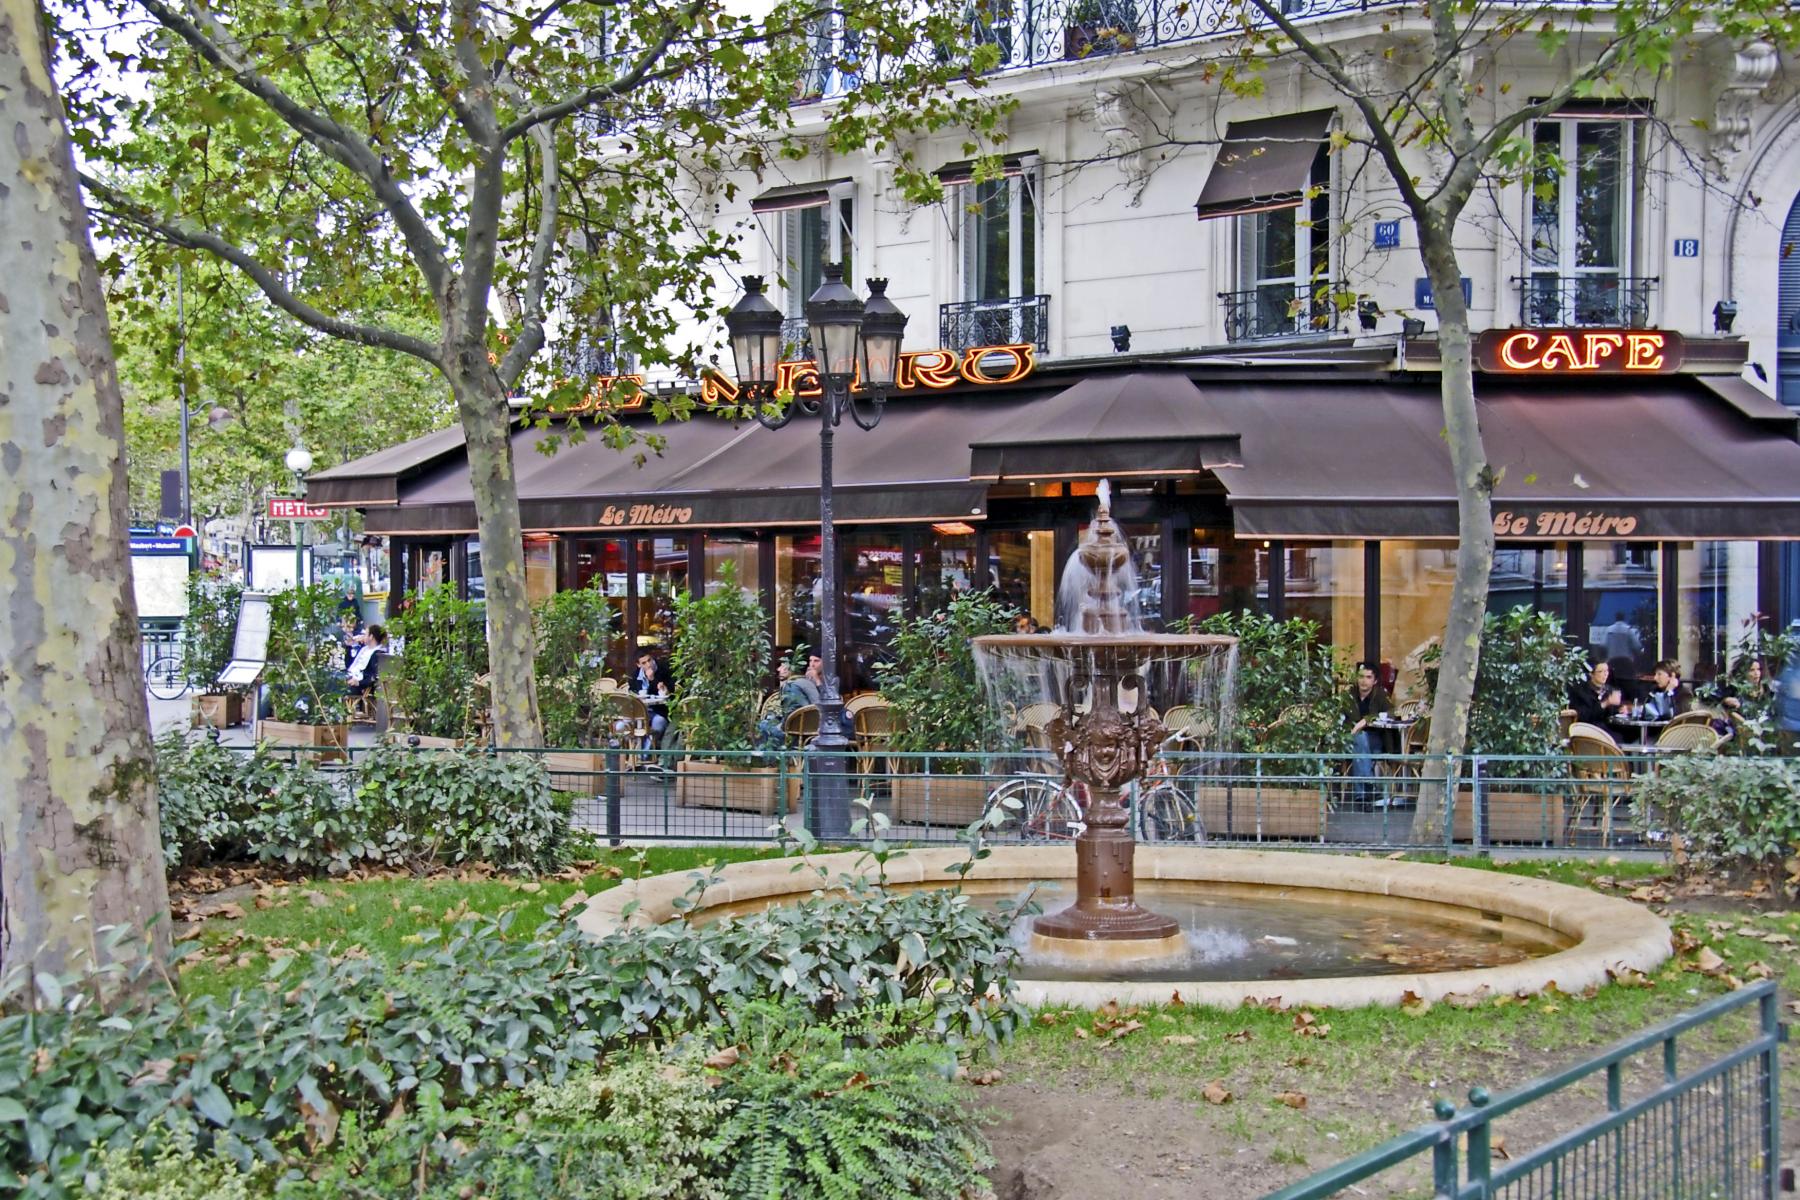 French Cafe - Paris